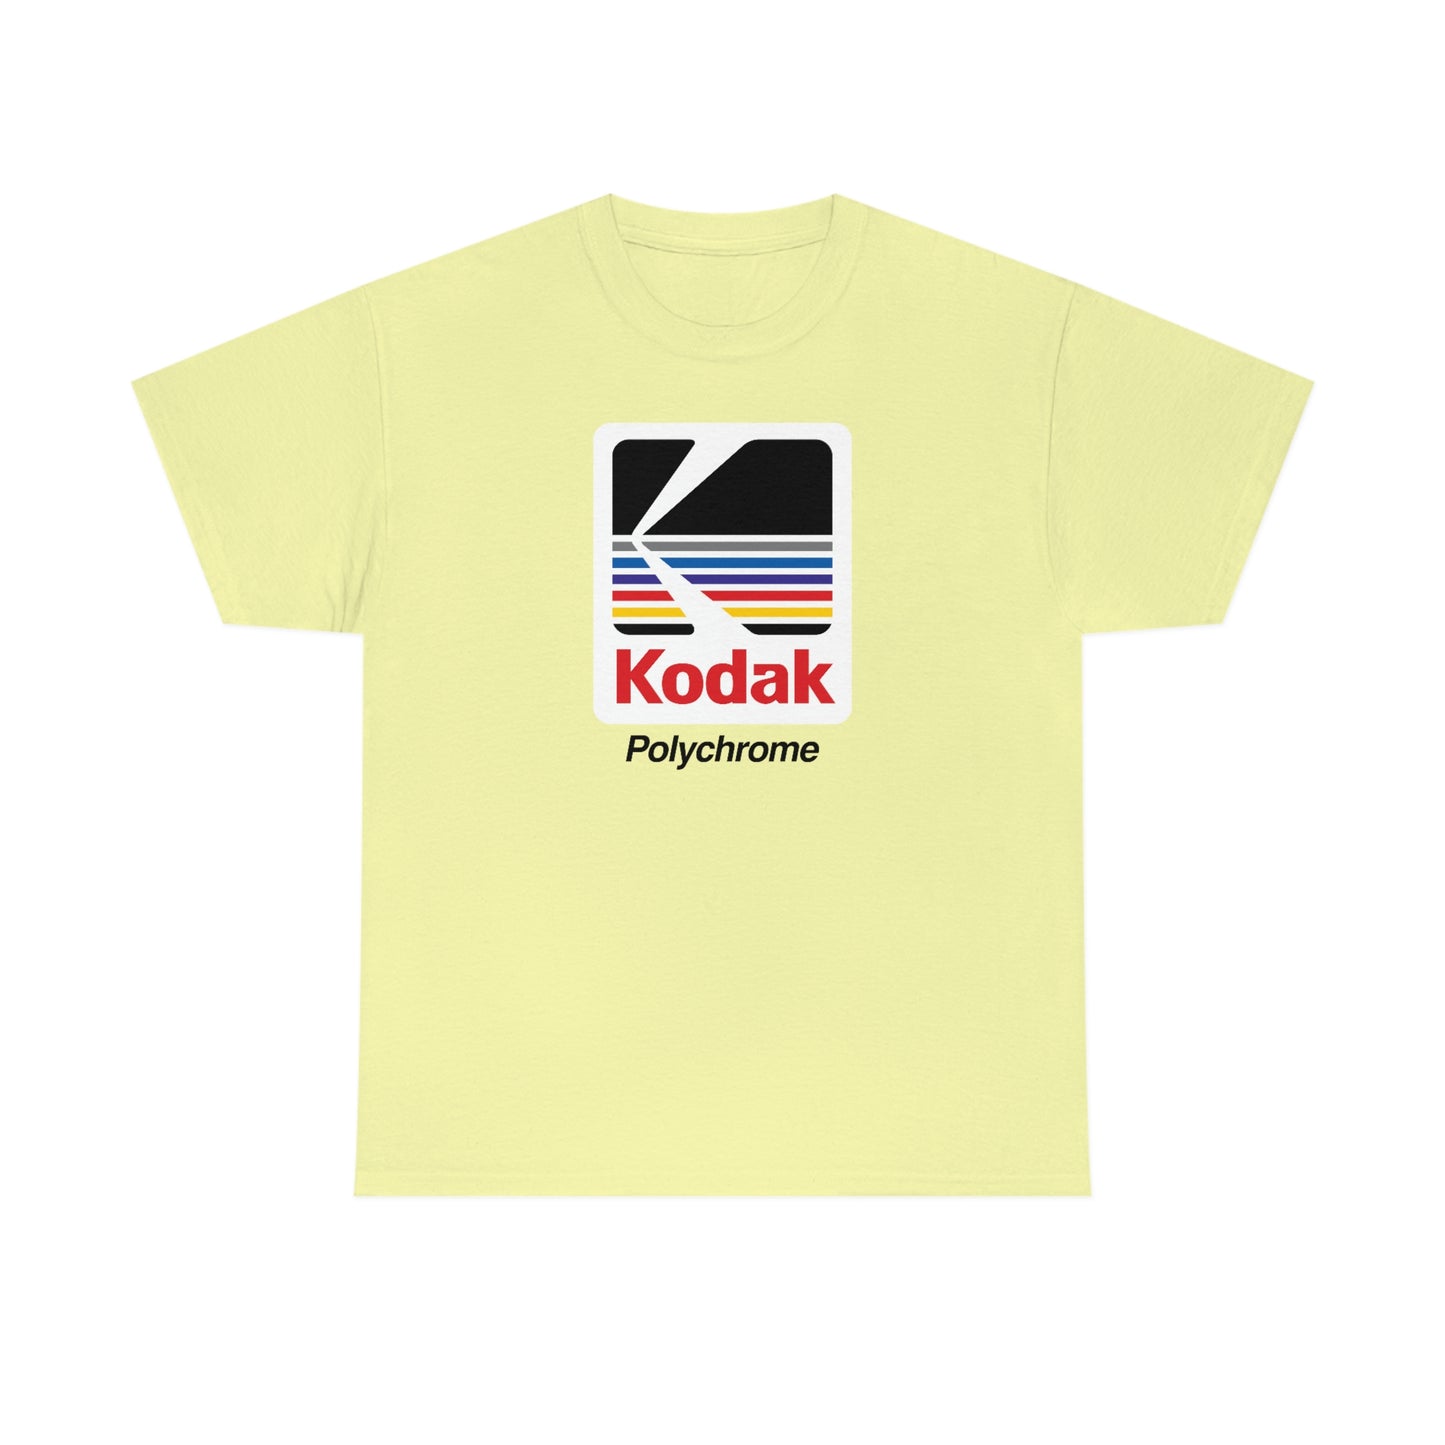 Kodak Polychrome T-Shirt